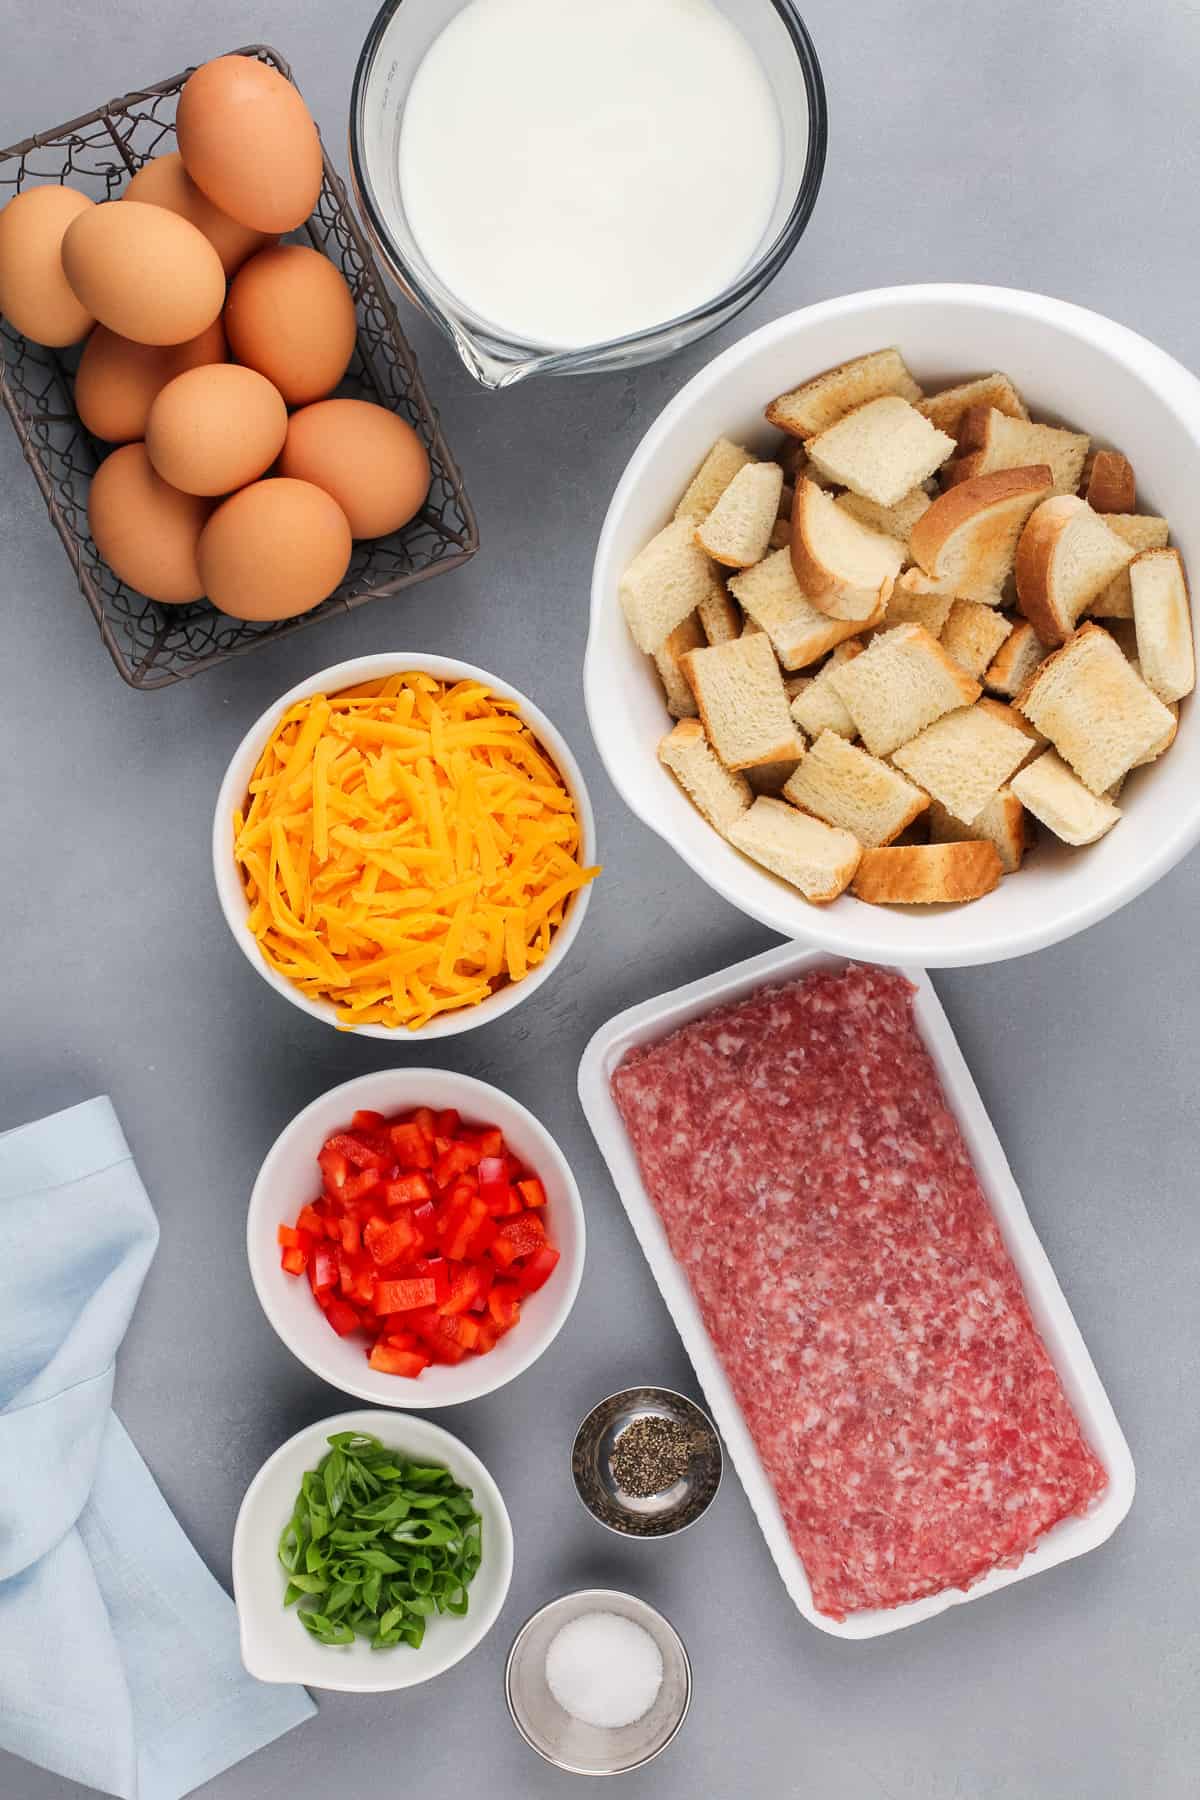 Ingredients for make-ahead breakfast casserole arranged on a gray countertop.